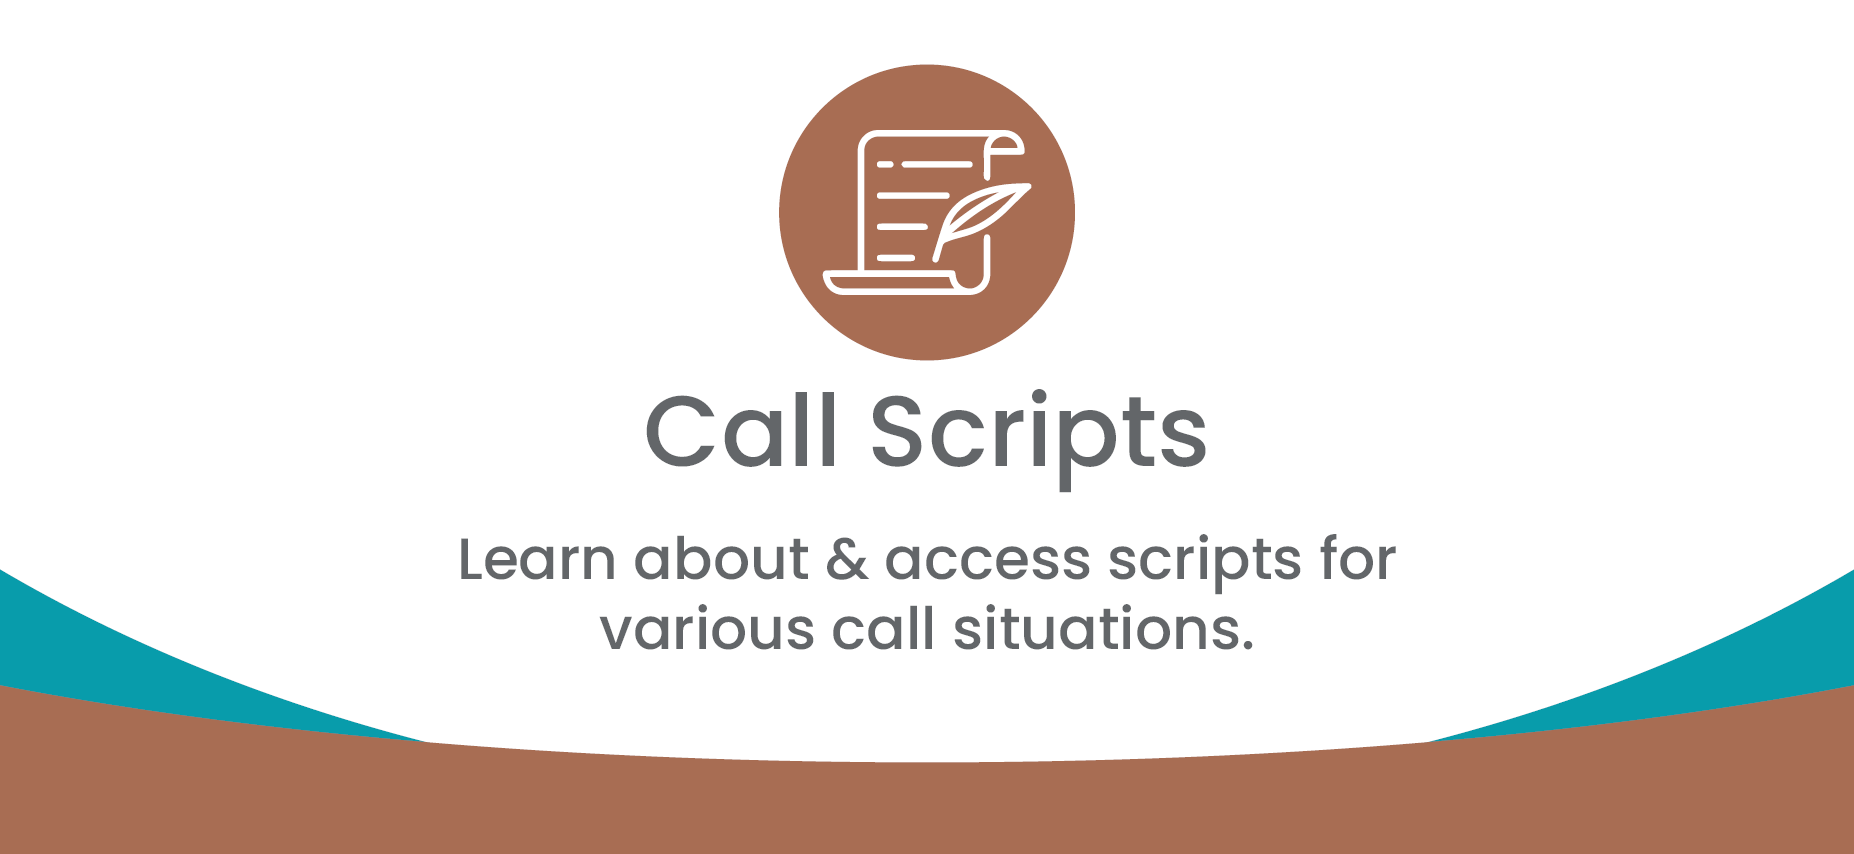 Call Scripts